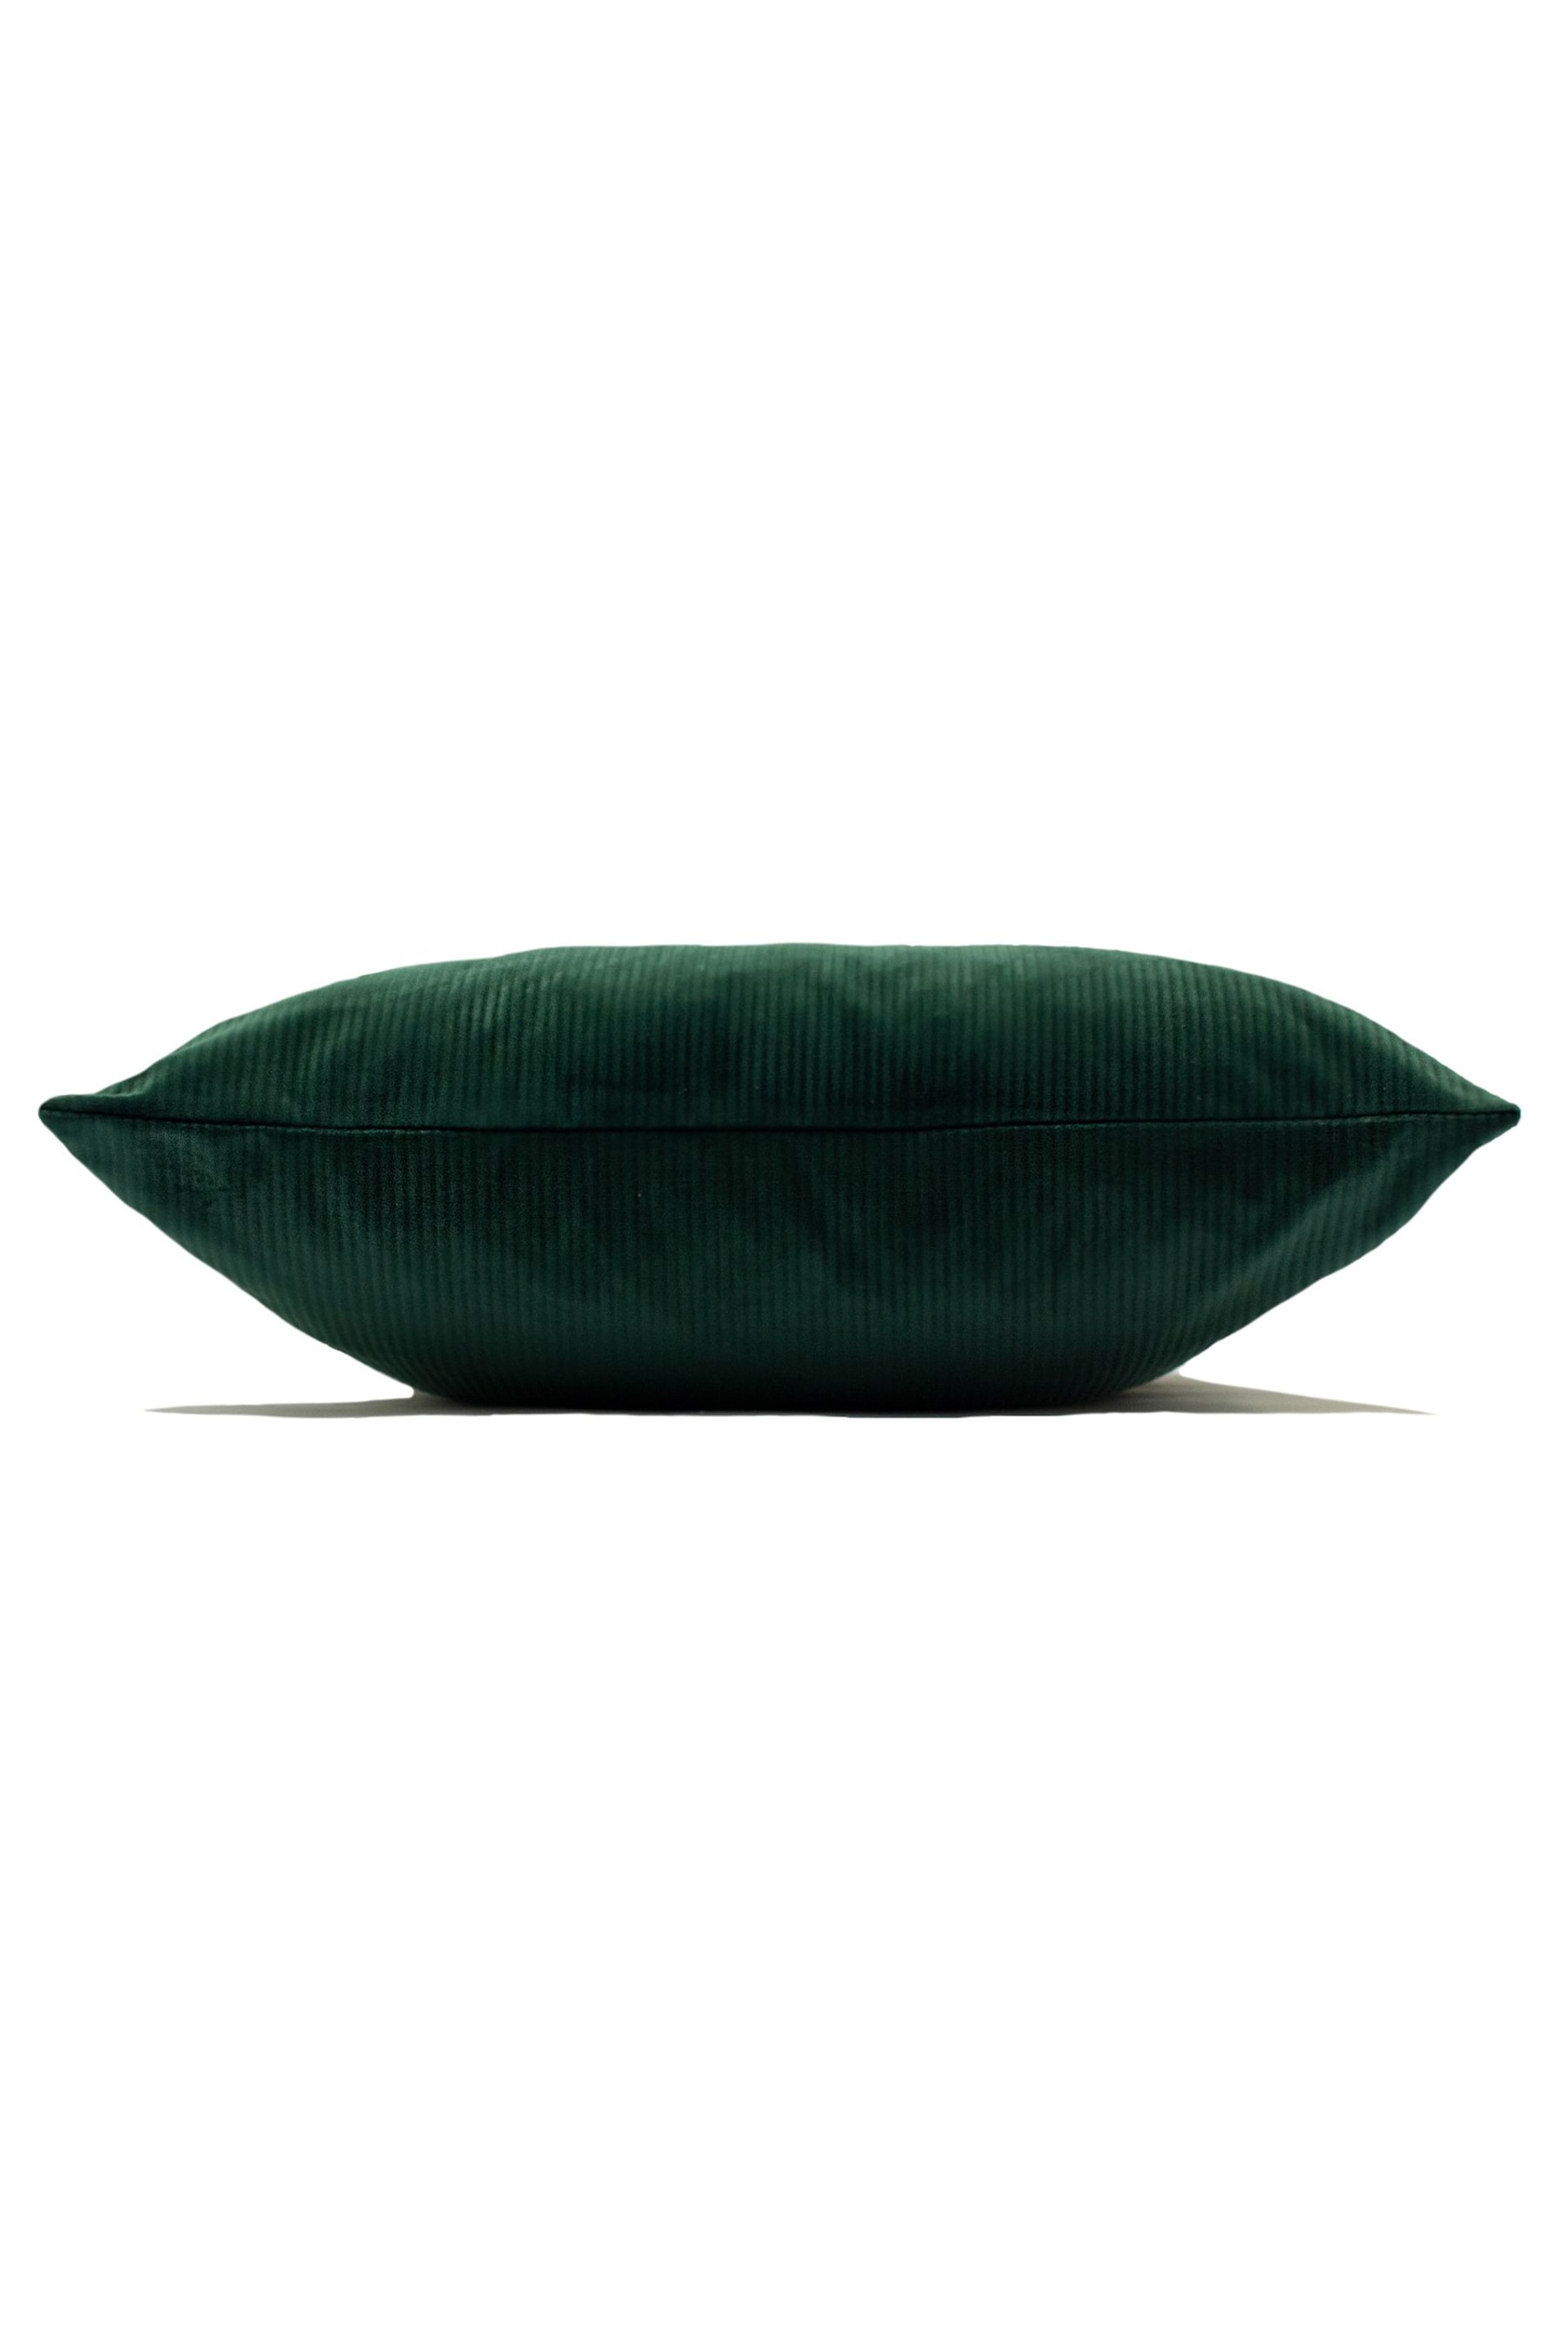 furn. 2 Pack Green Aurora Filled Cushions - Image 2 of 5